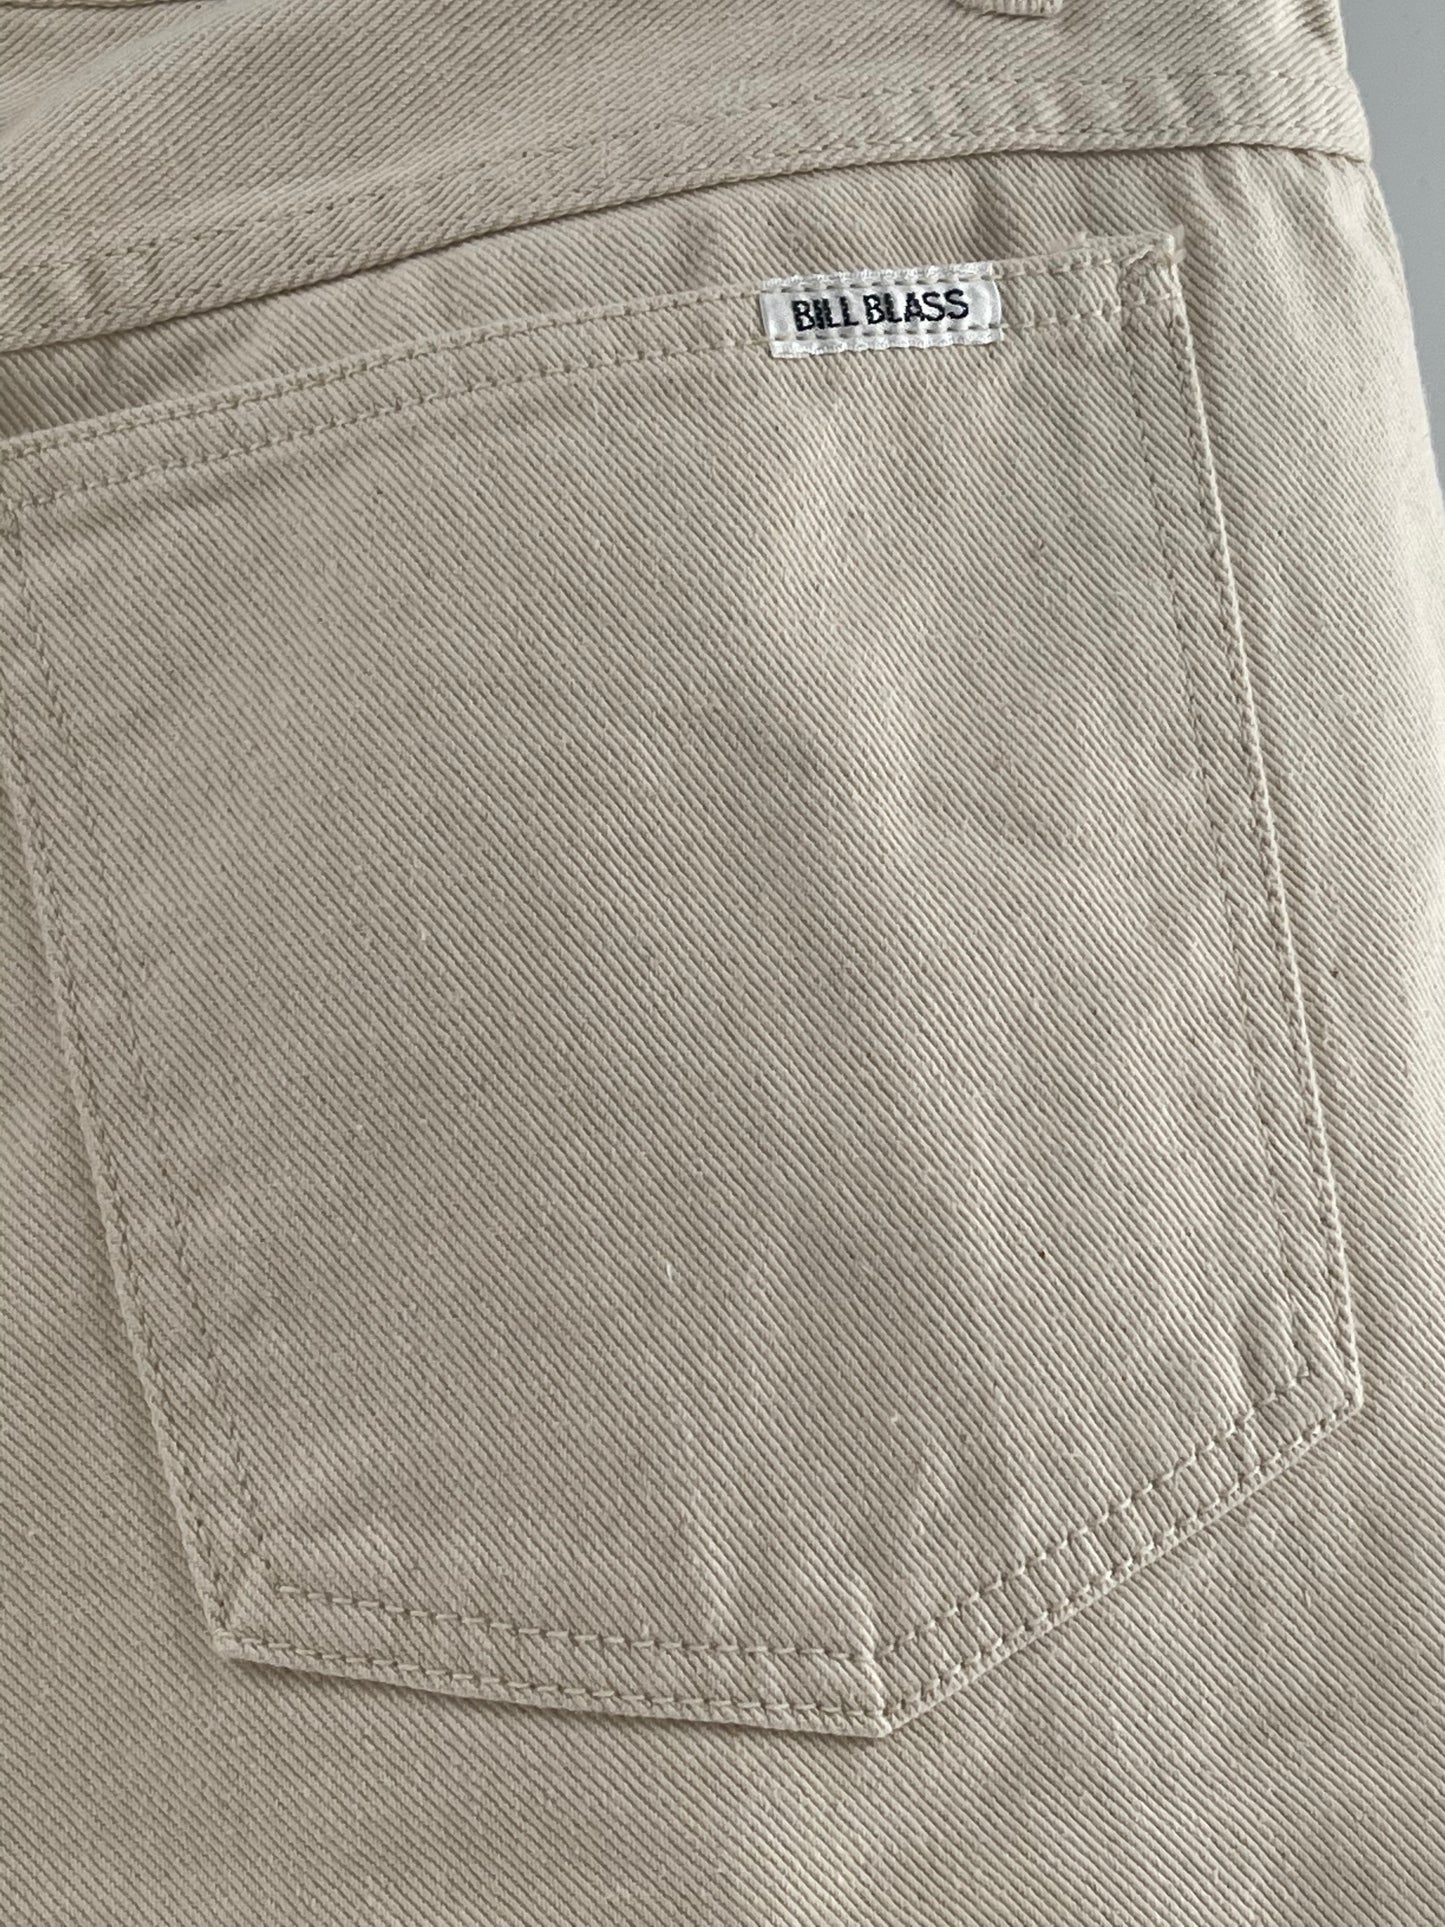 Bill Blass 90’s Off-White jeans (Size 14)